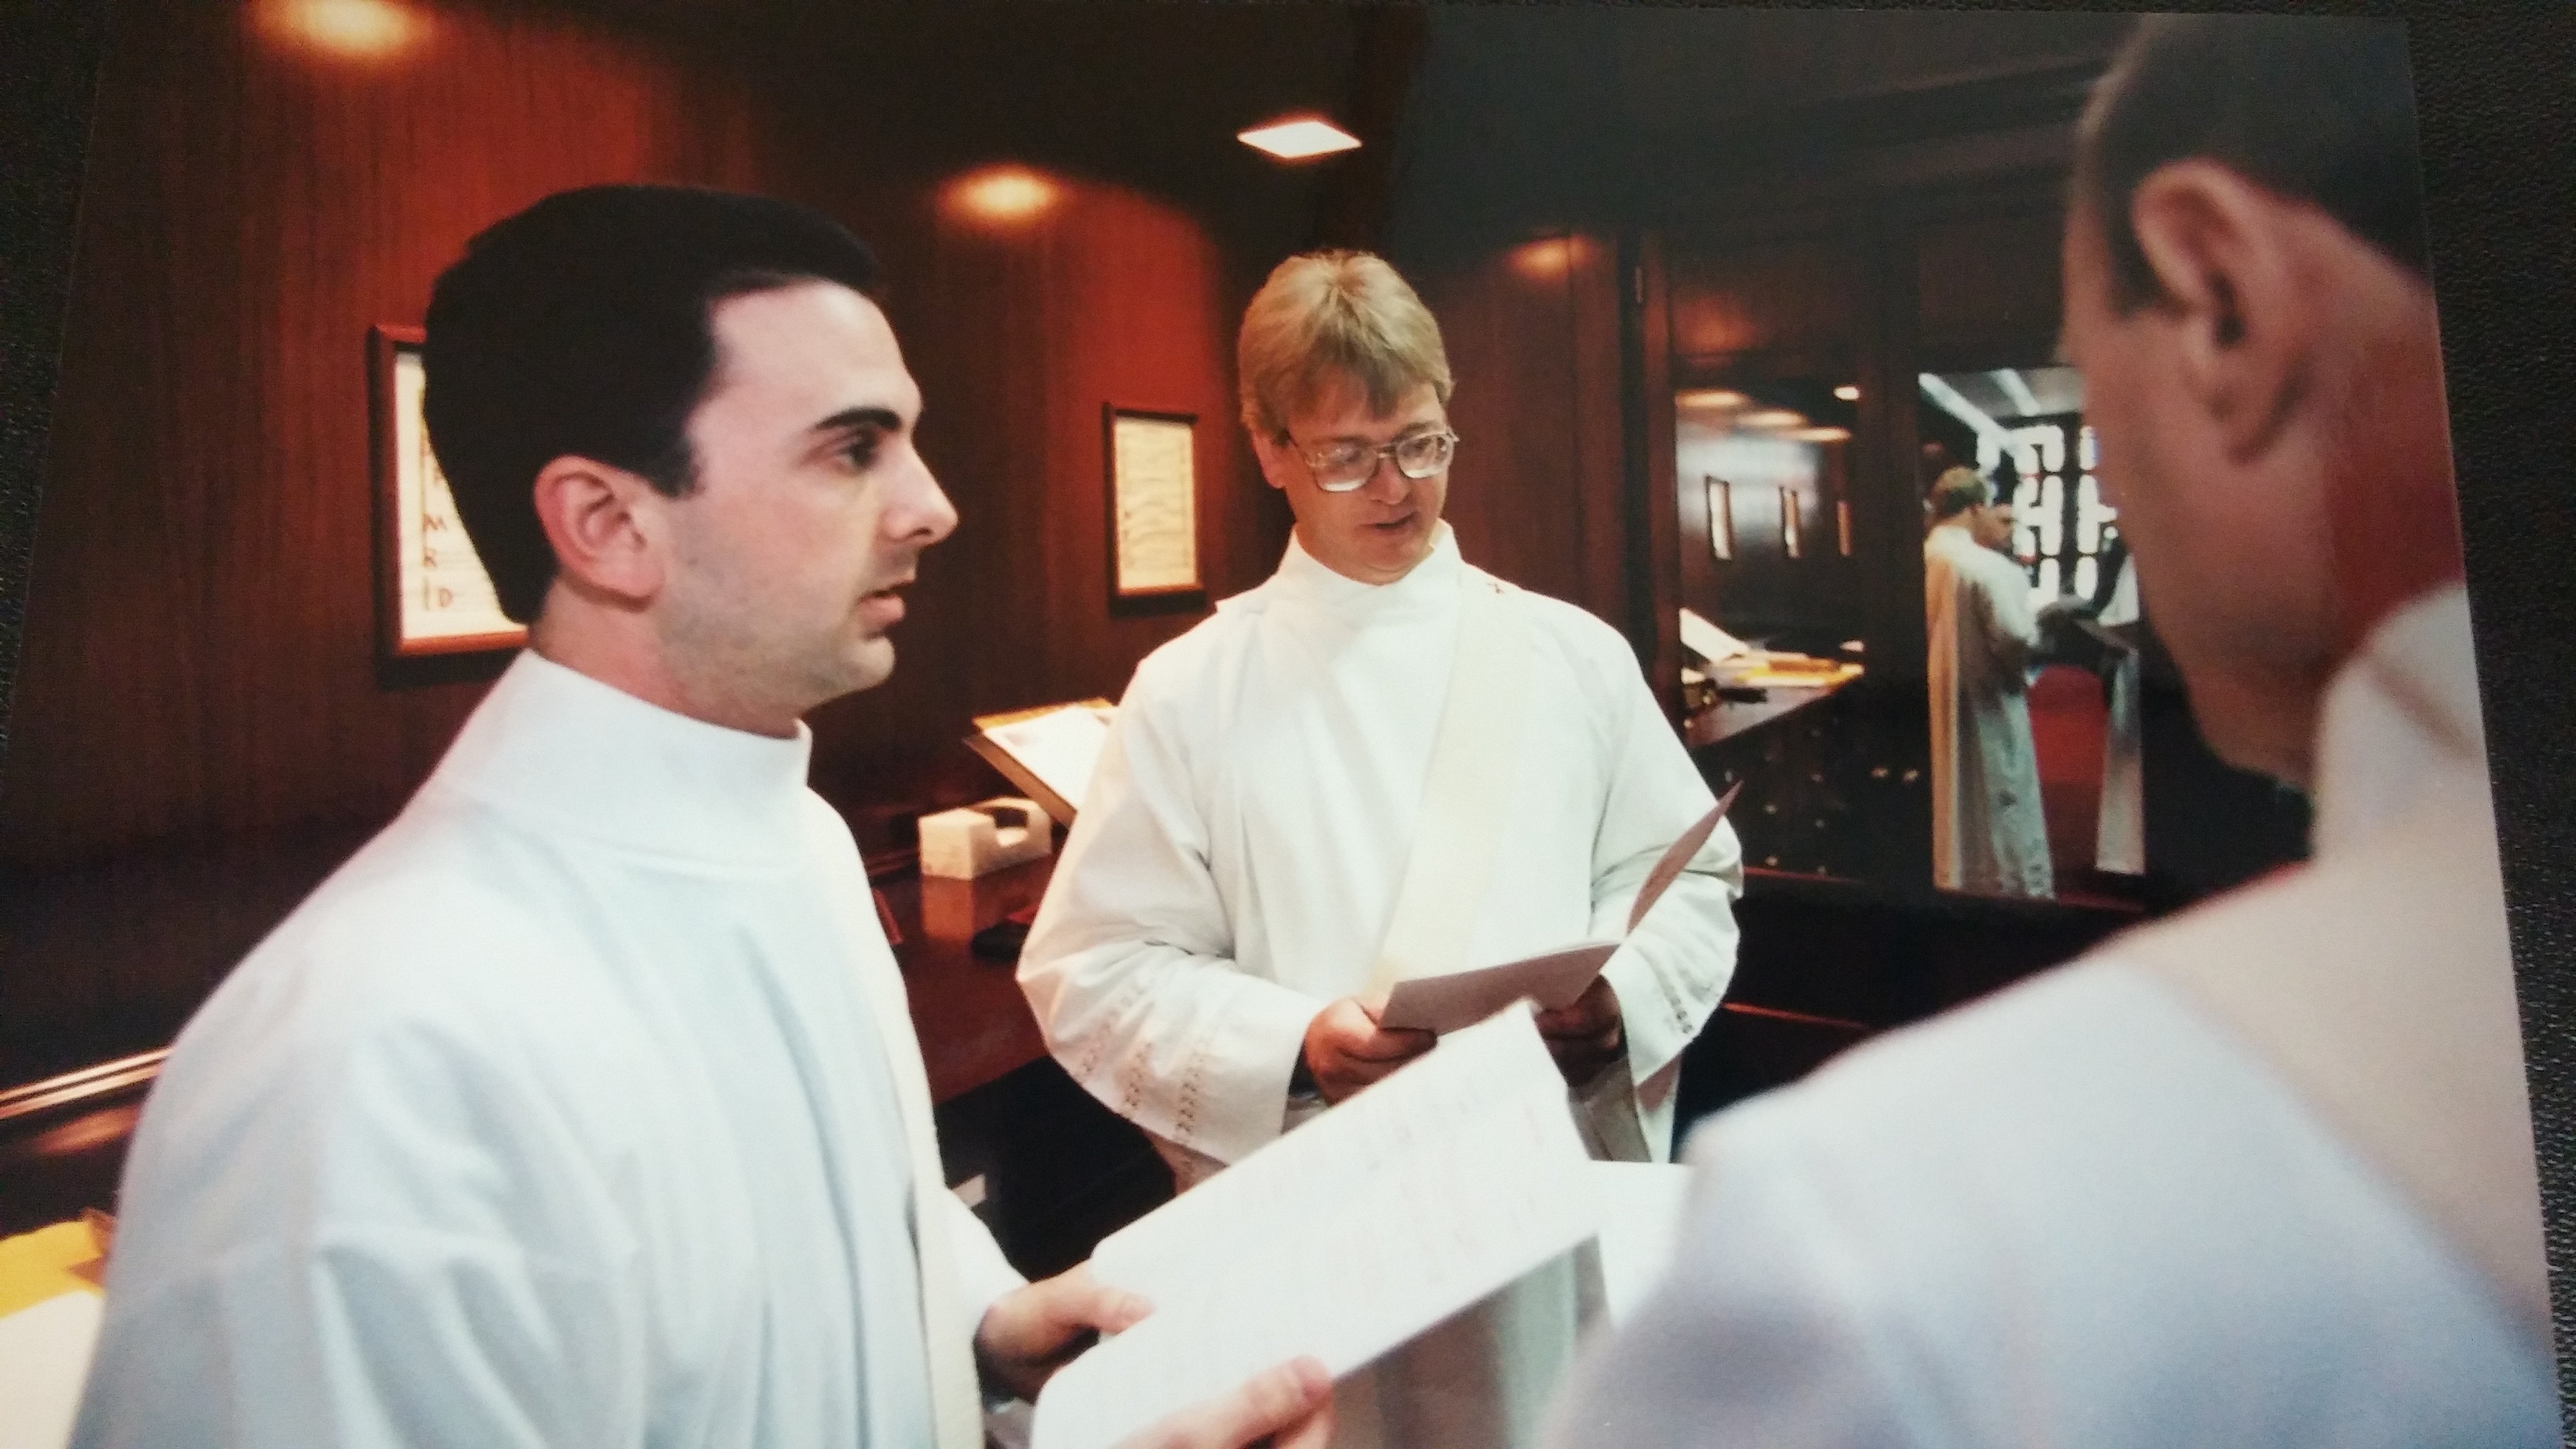 Deacons Piepmeyer, Fullmer, and Meyer prepare for Ordination